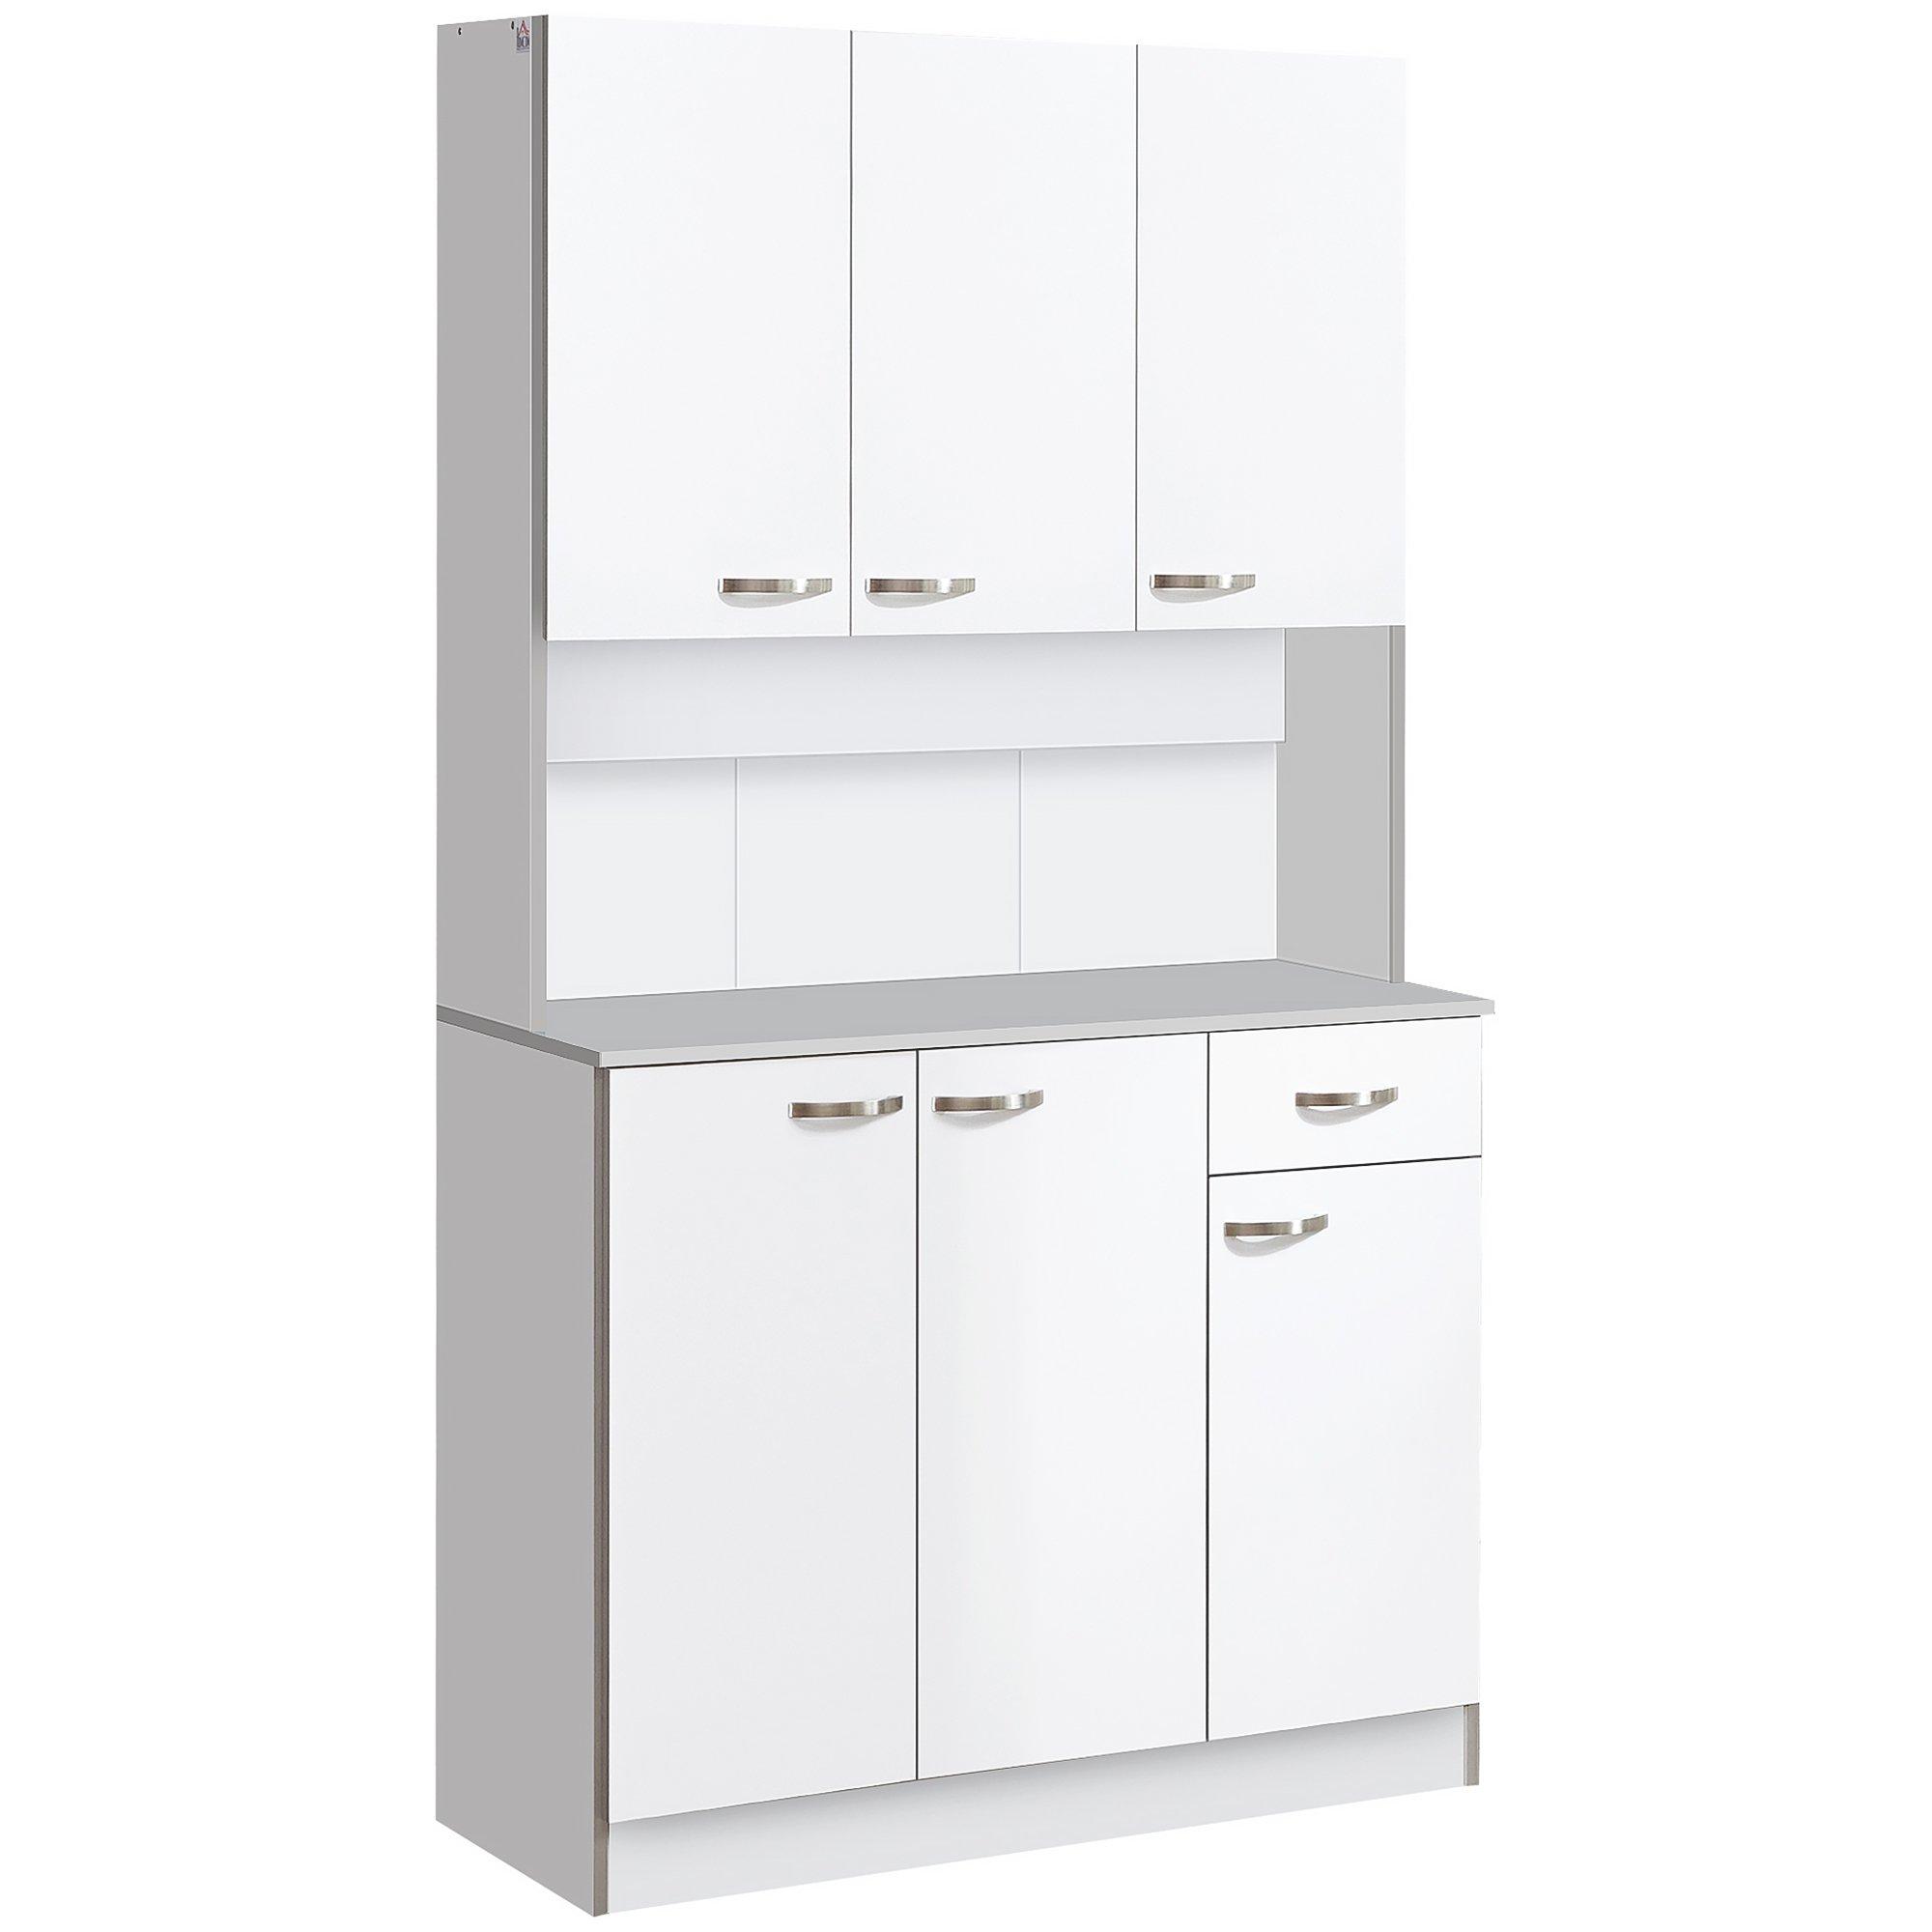 Kitchen Storage Cabinet with 6 Doors Drawer Adjustable Shelves